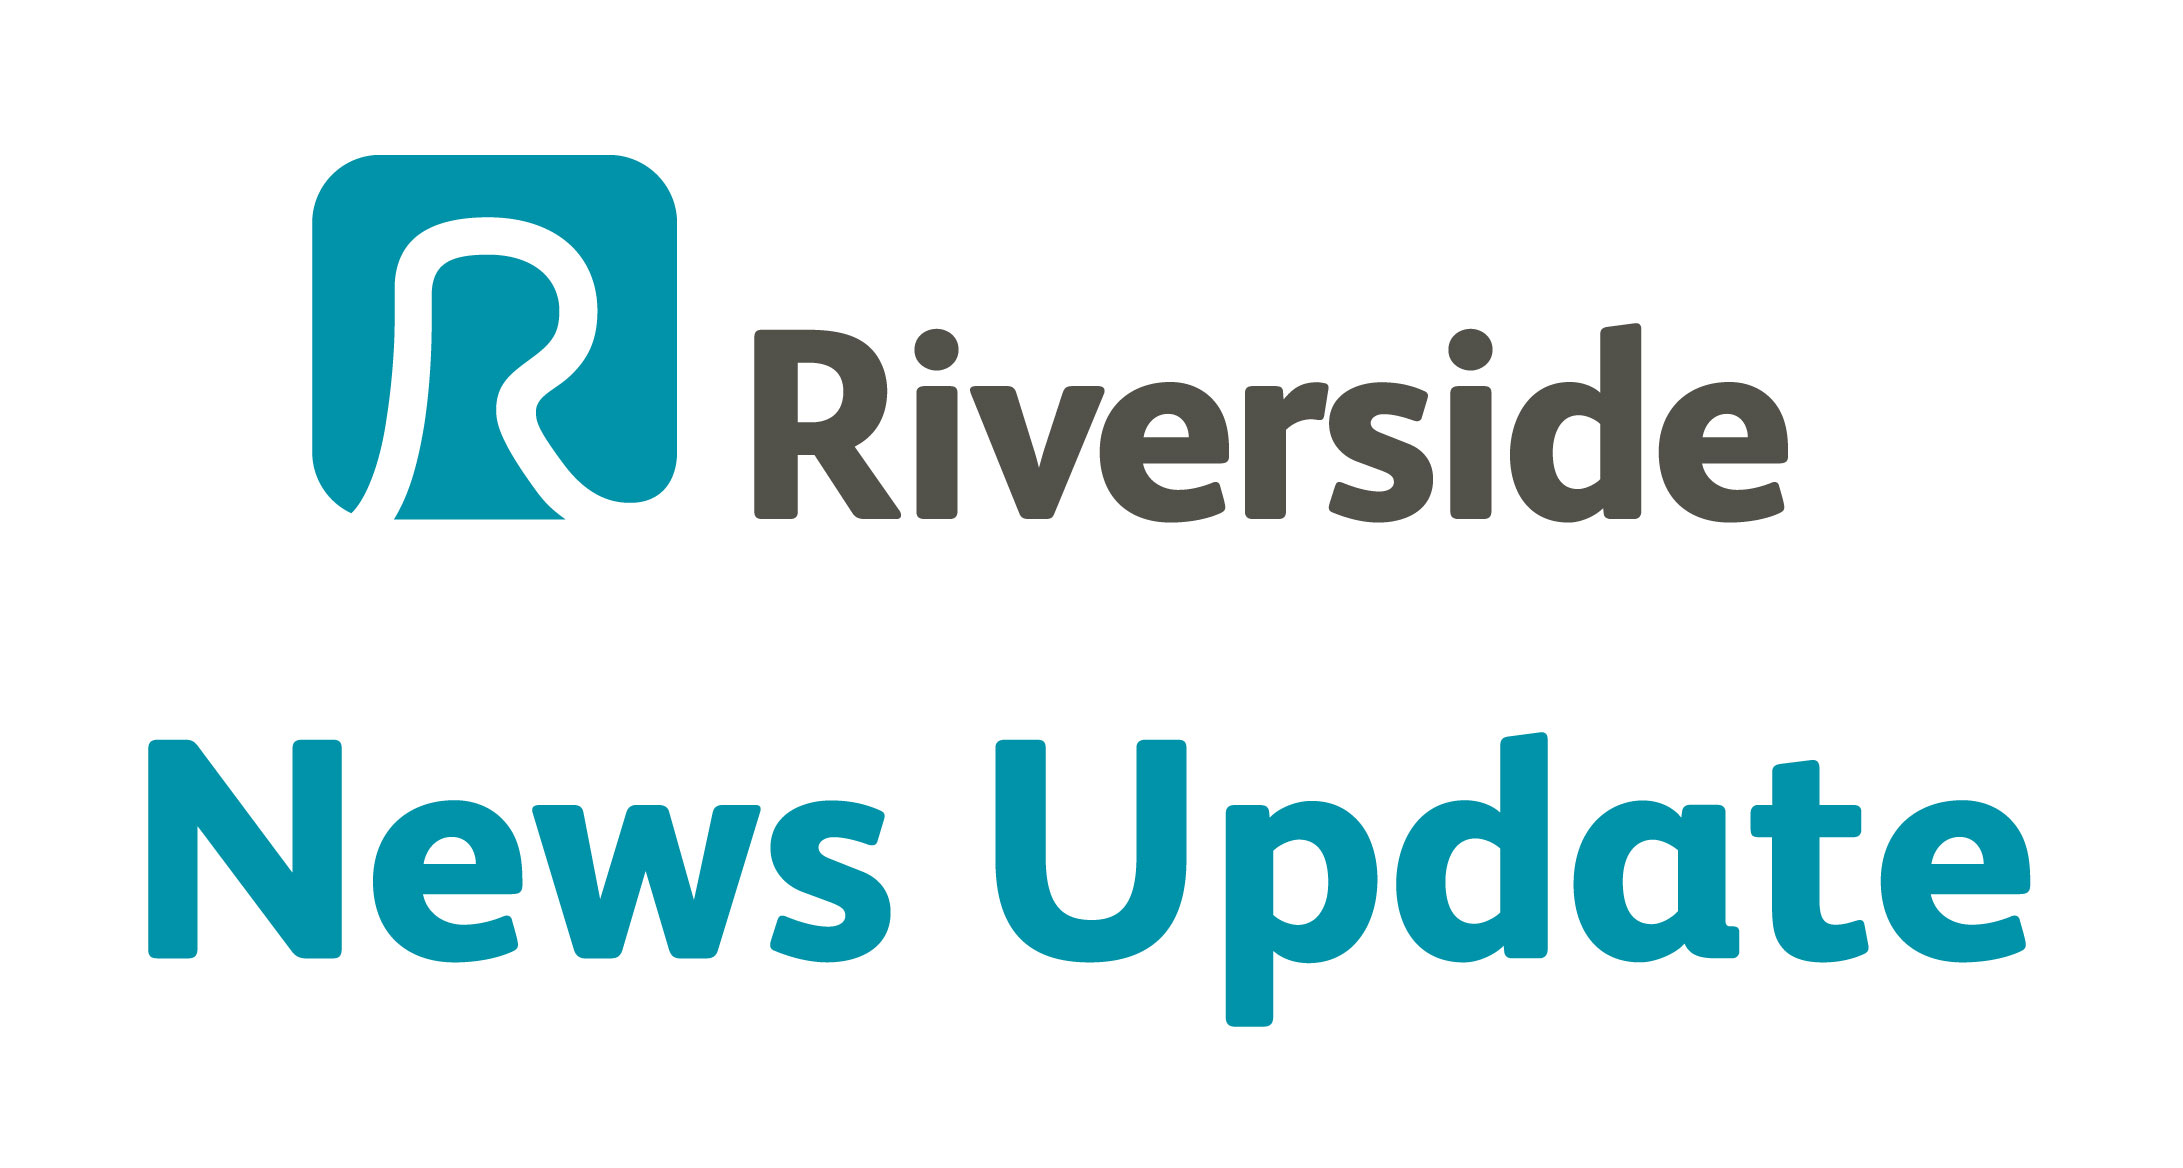 Riverside News Update